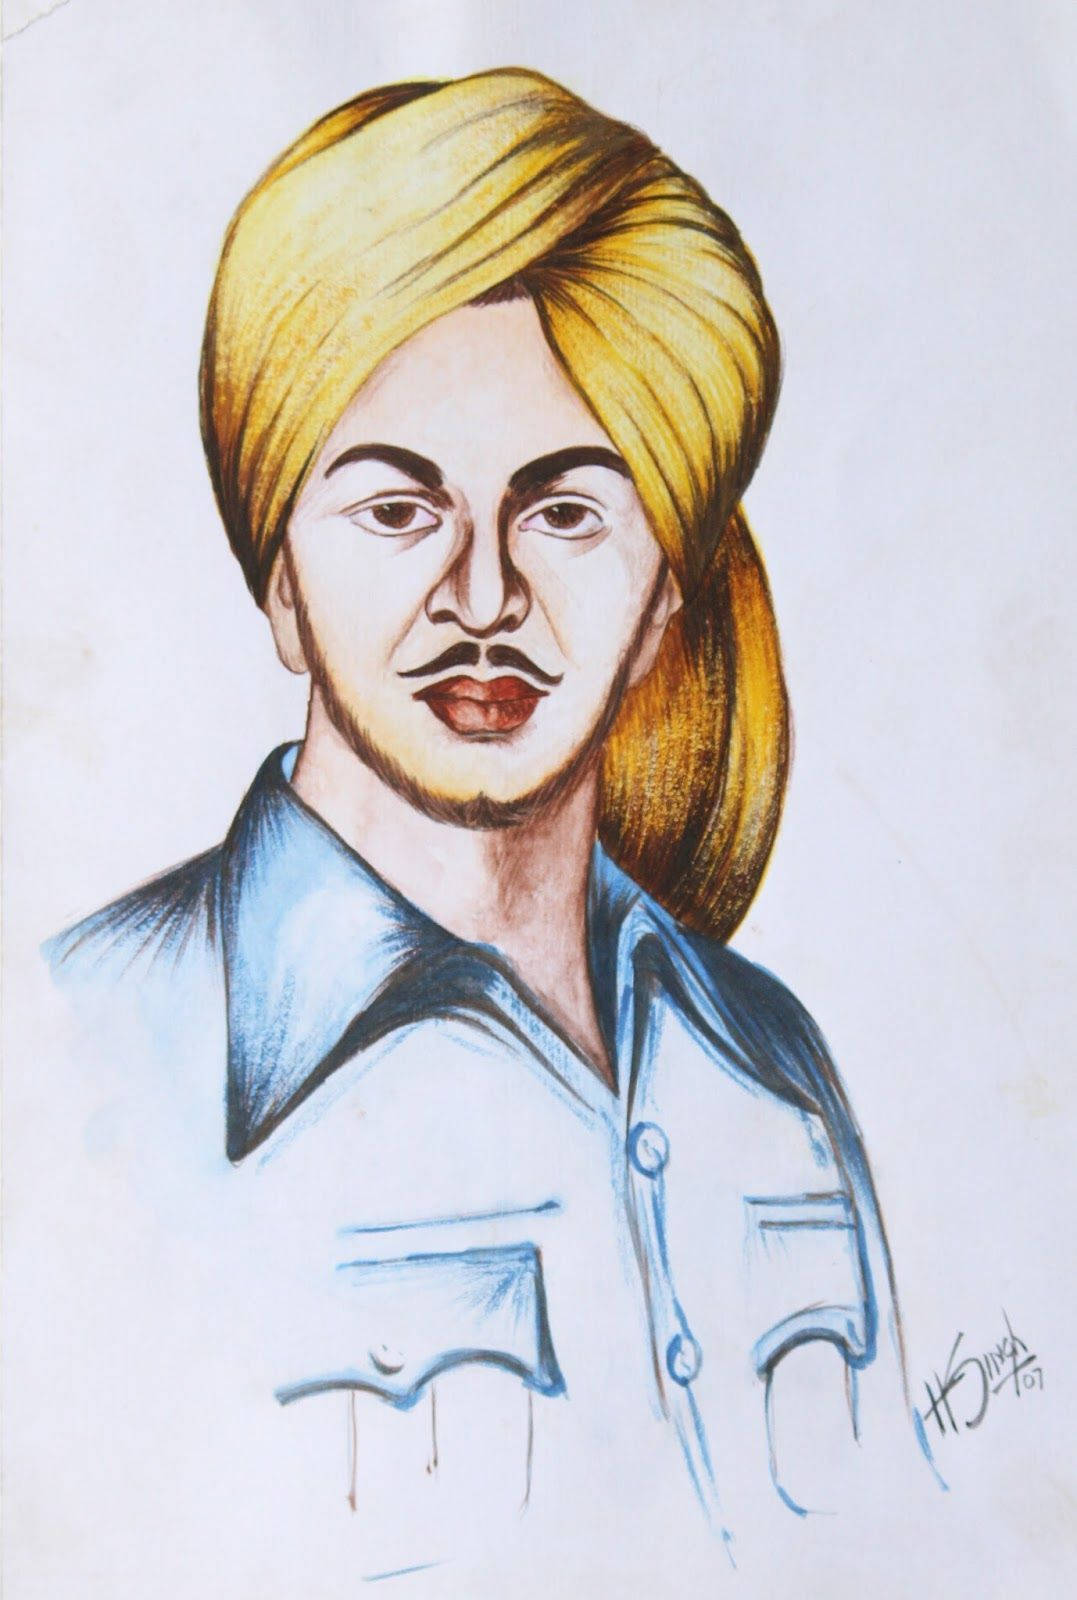 Shaheed Bhagat Singh Sketch Wallpaper